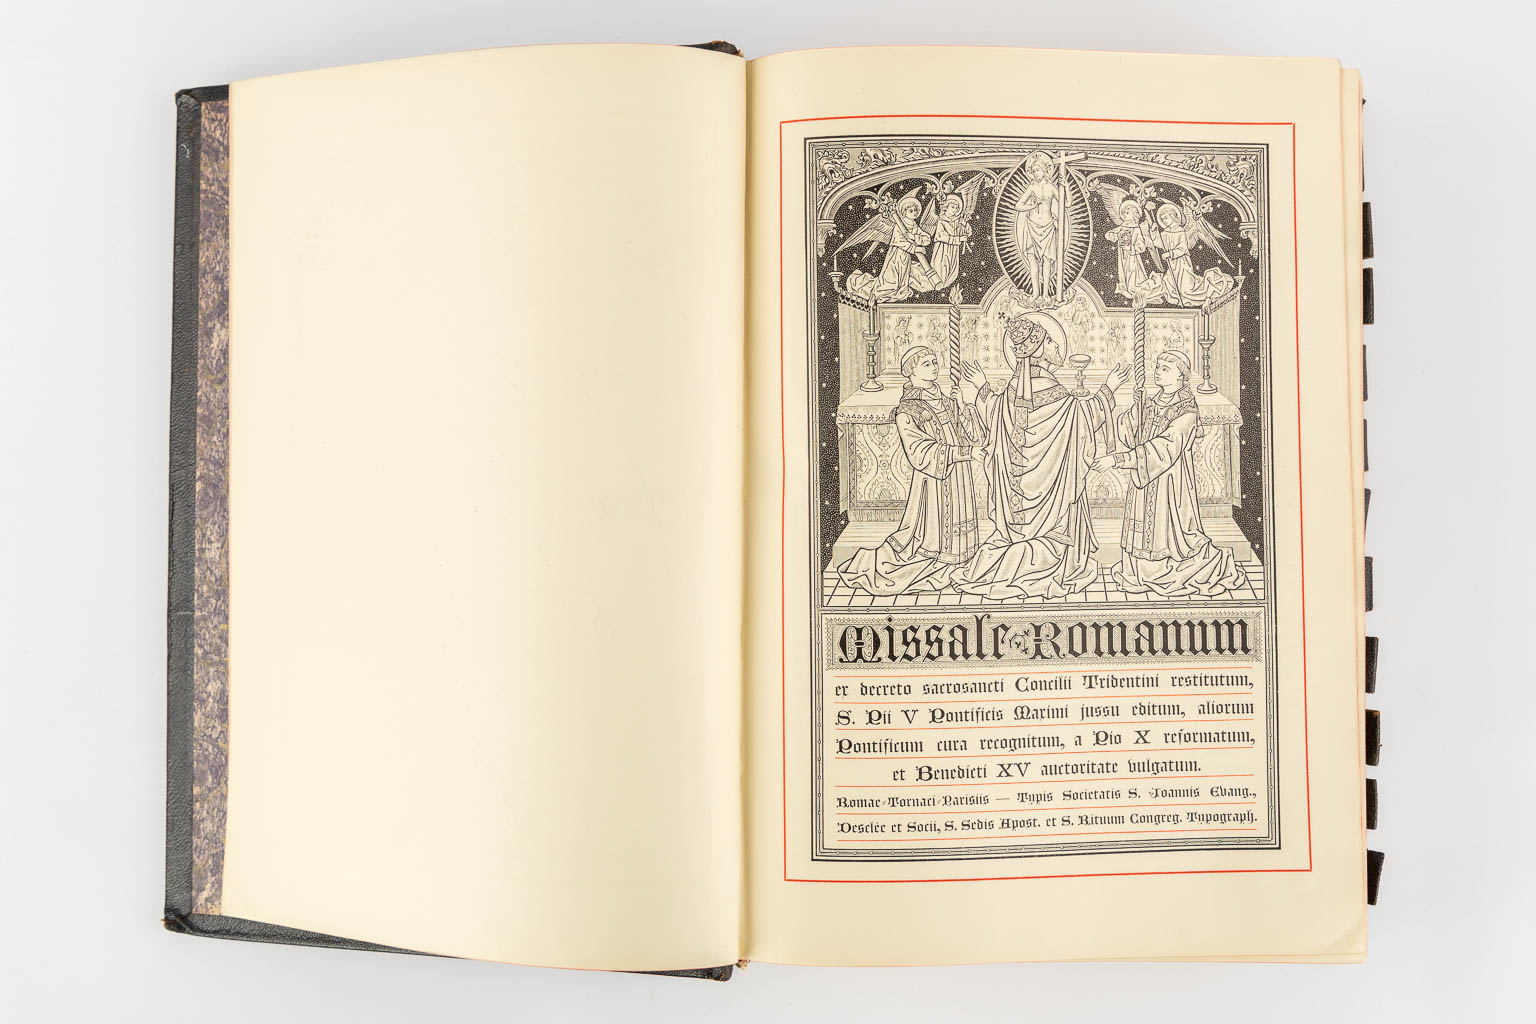 Two 'Missale Romanum' books. (W:23 x H:32 cm) - Image 10 of 11